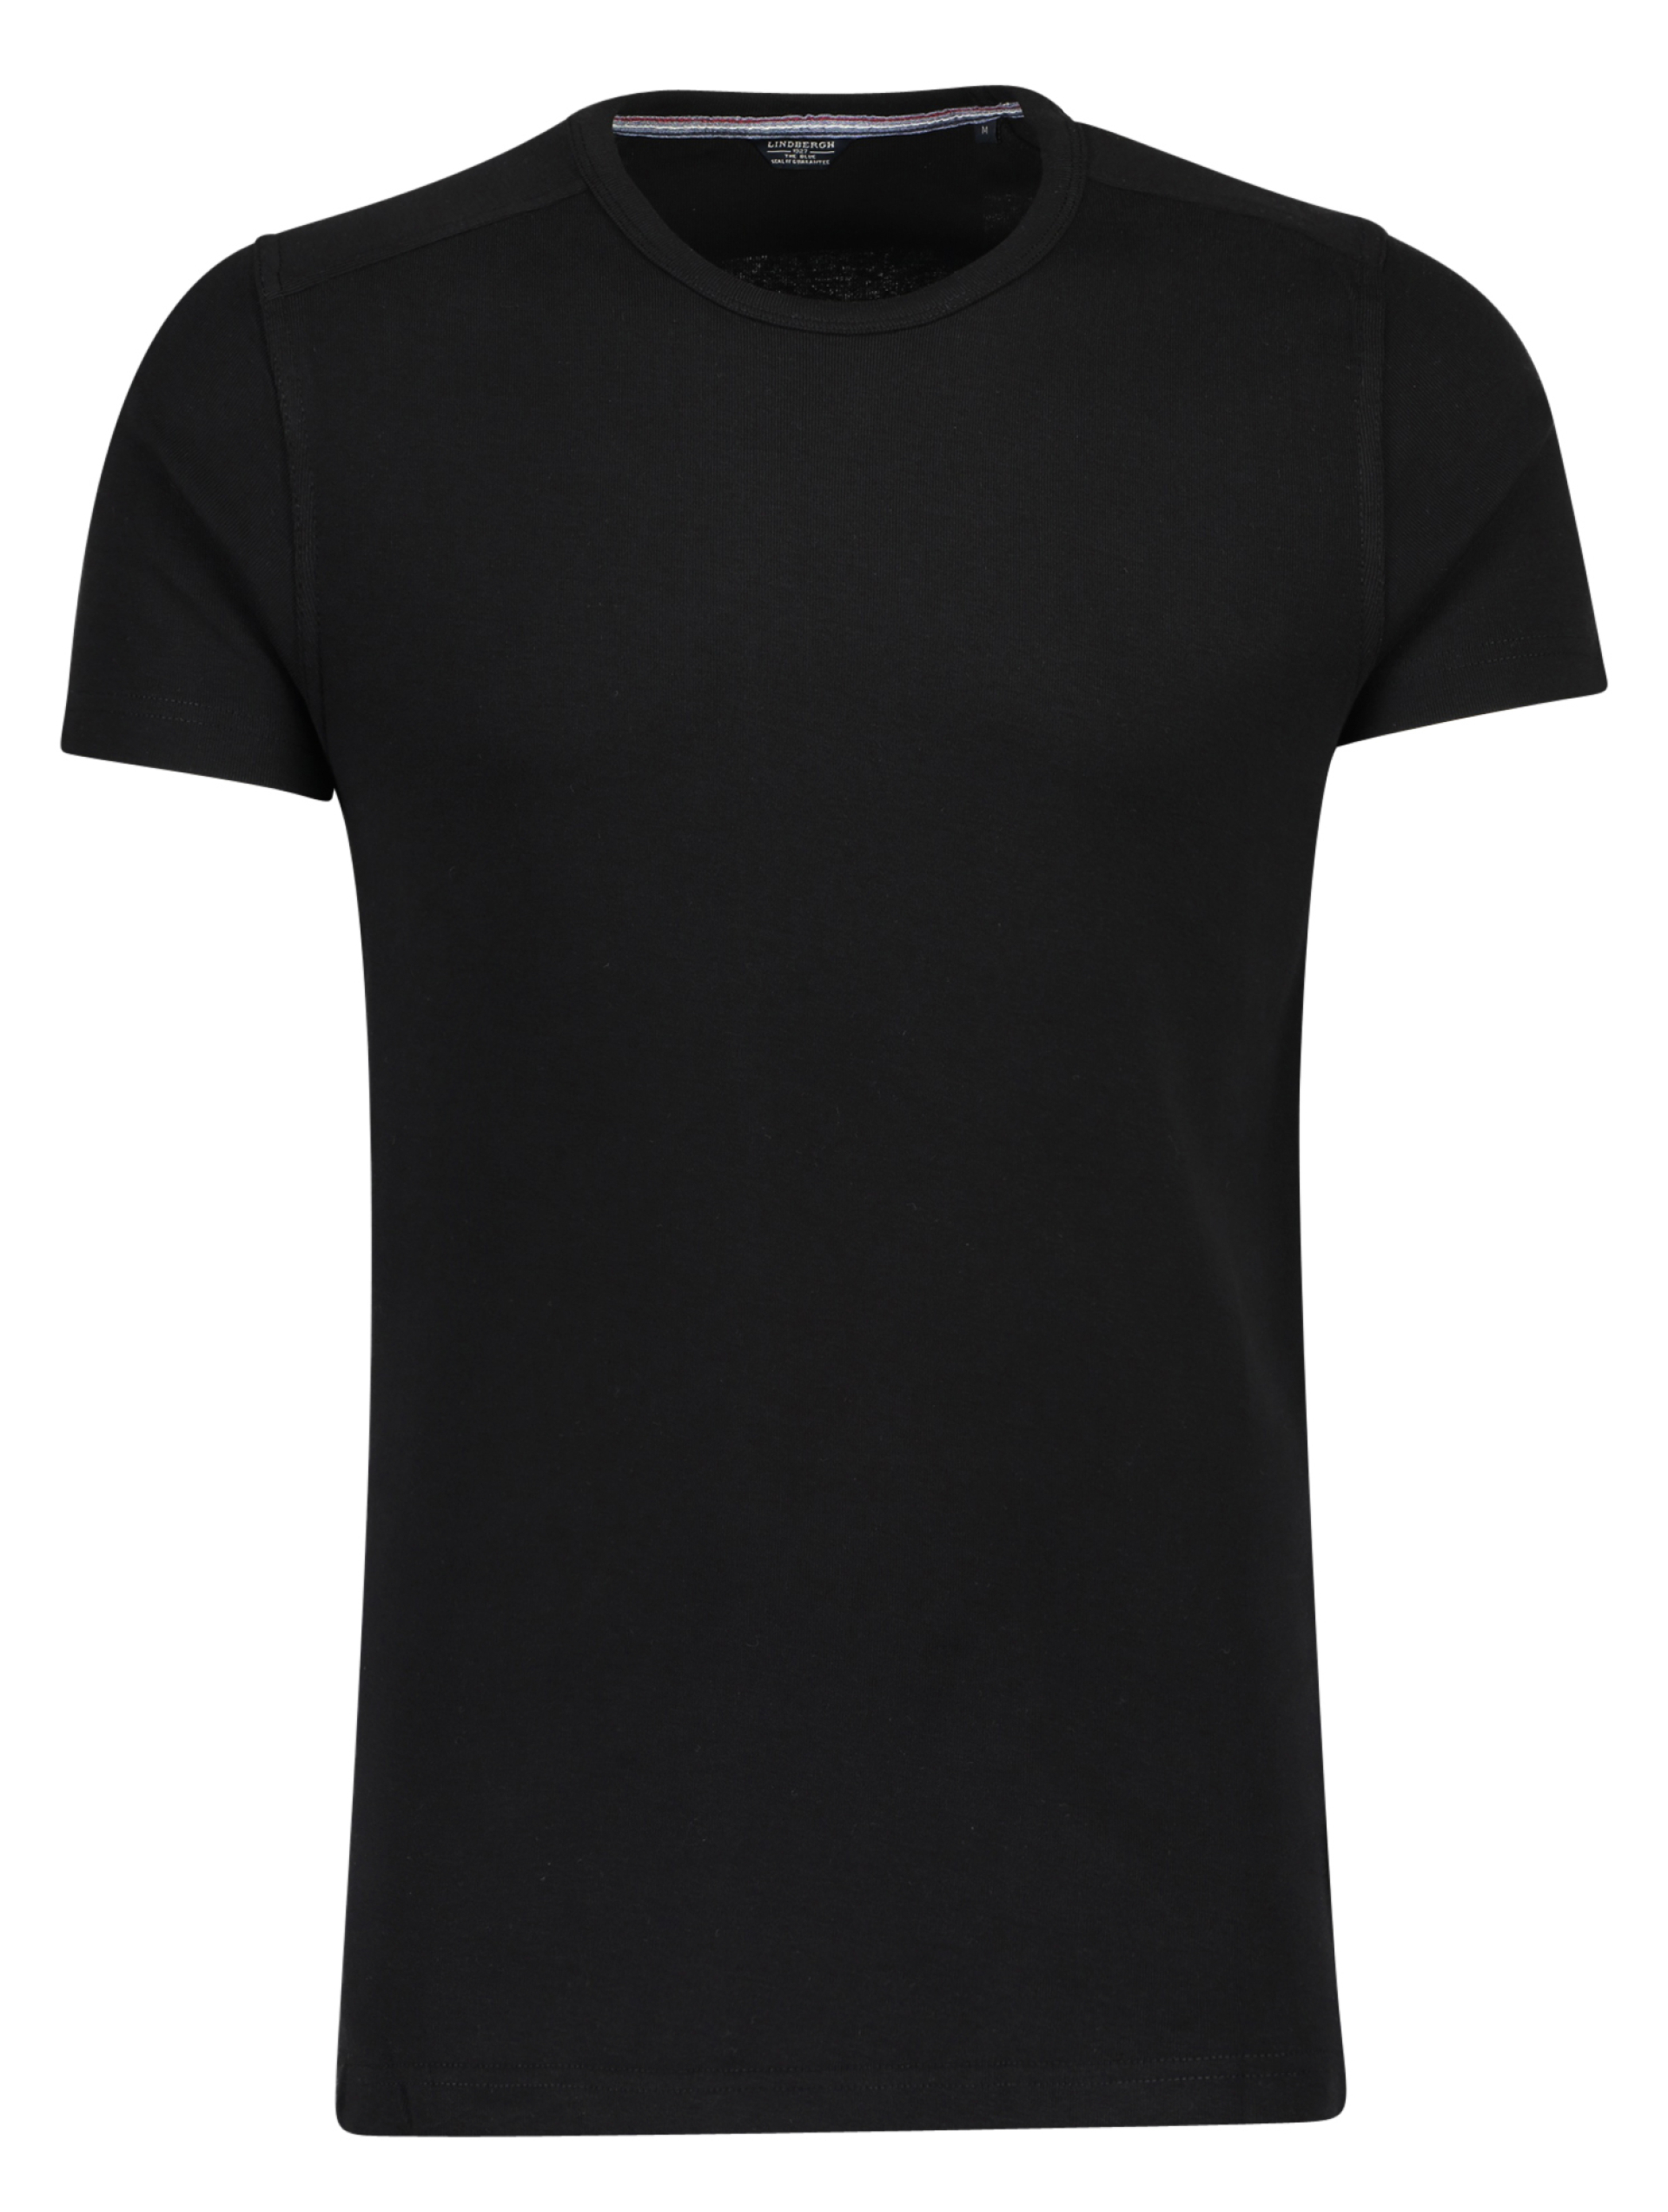 Lindbergh T-Shirt schwarz / black